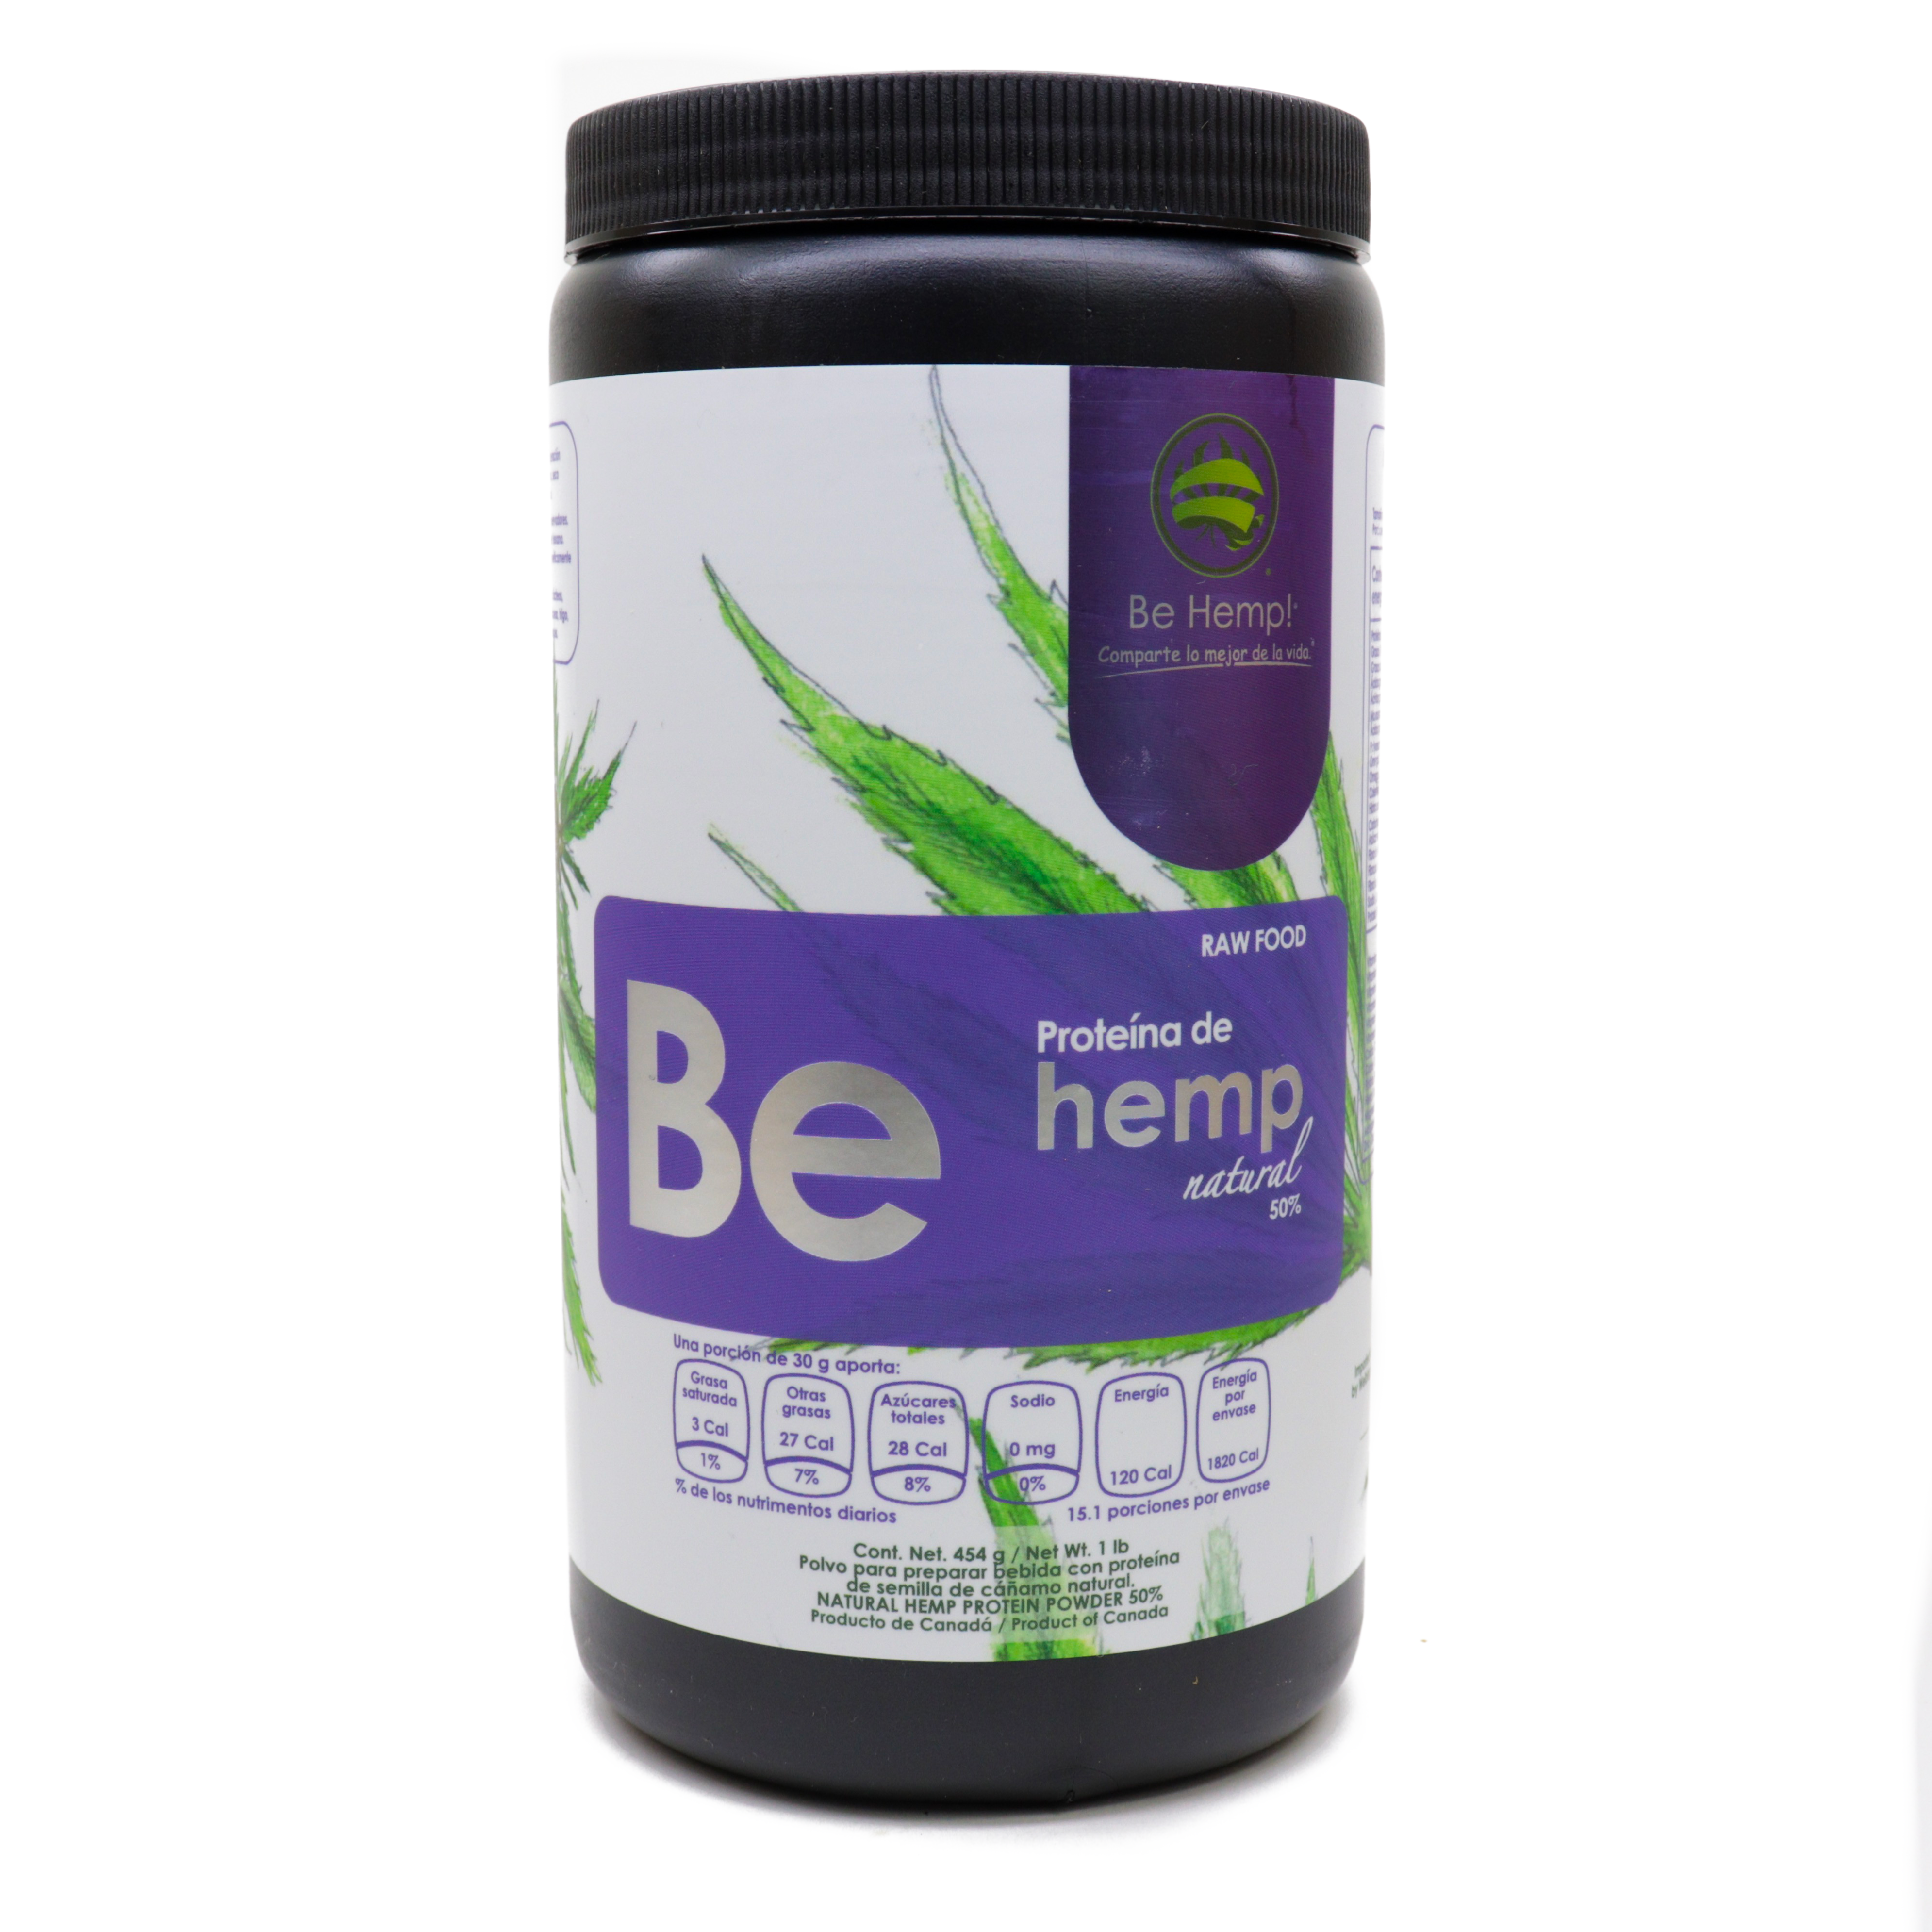 Be Hemp! Proteína de hemp natural al 50% 454 g